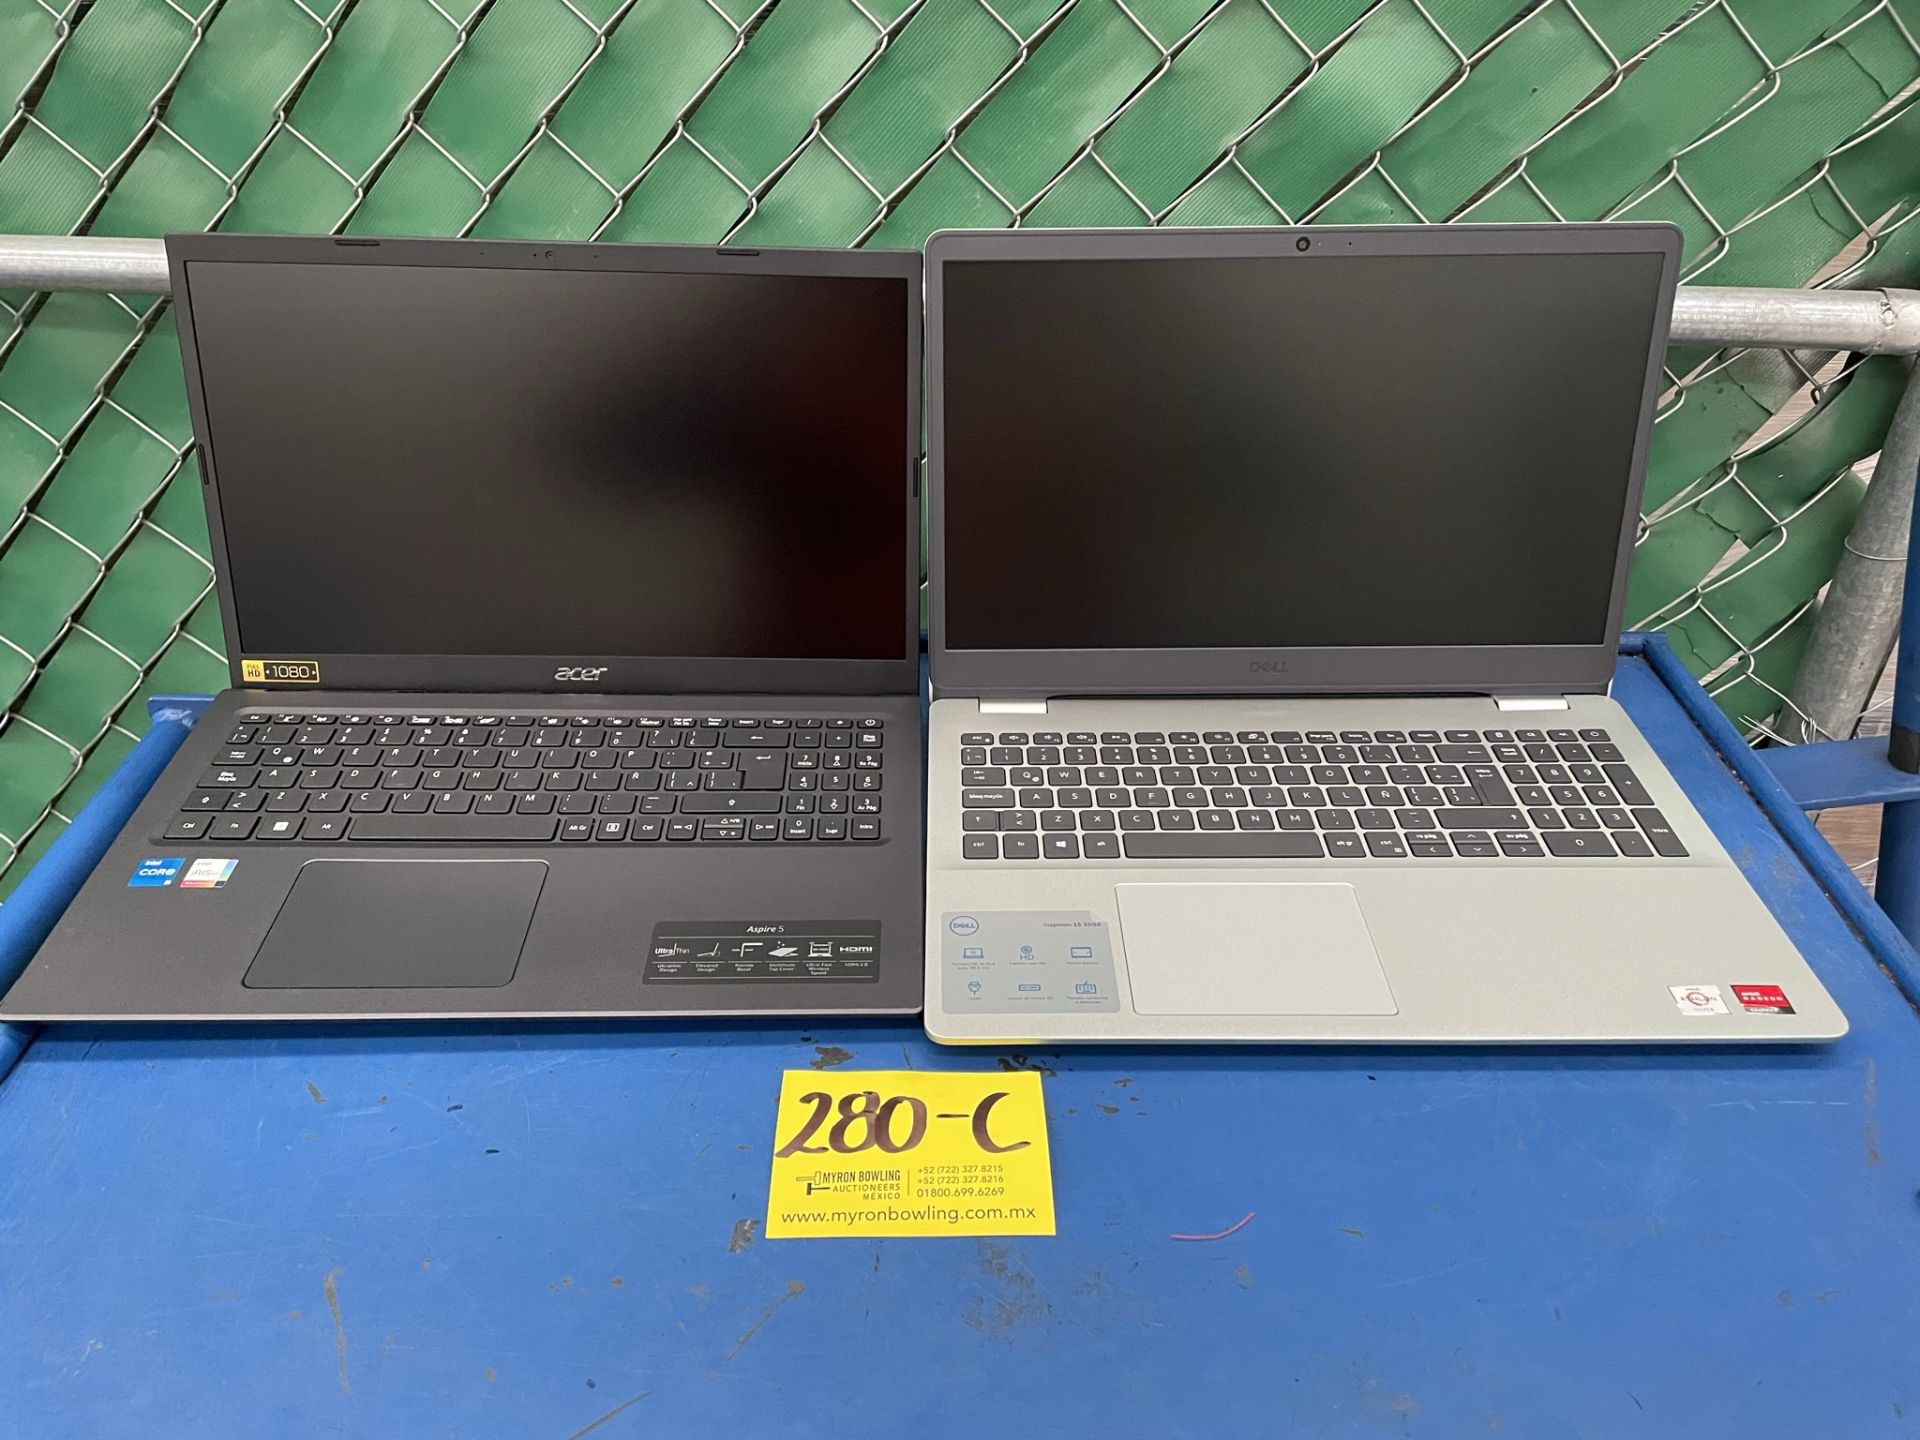 (EQUIPO NUEVO) Lote De 2 Laptops Contiene: 1 Laptop Marca DELL, Modelo I3505, Serie N/D, SO WINDOWS - Image 5 of 9